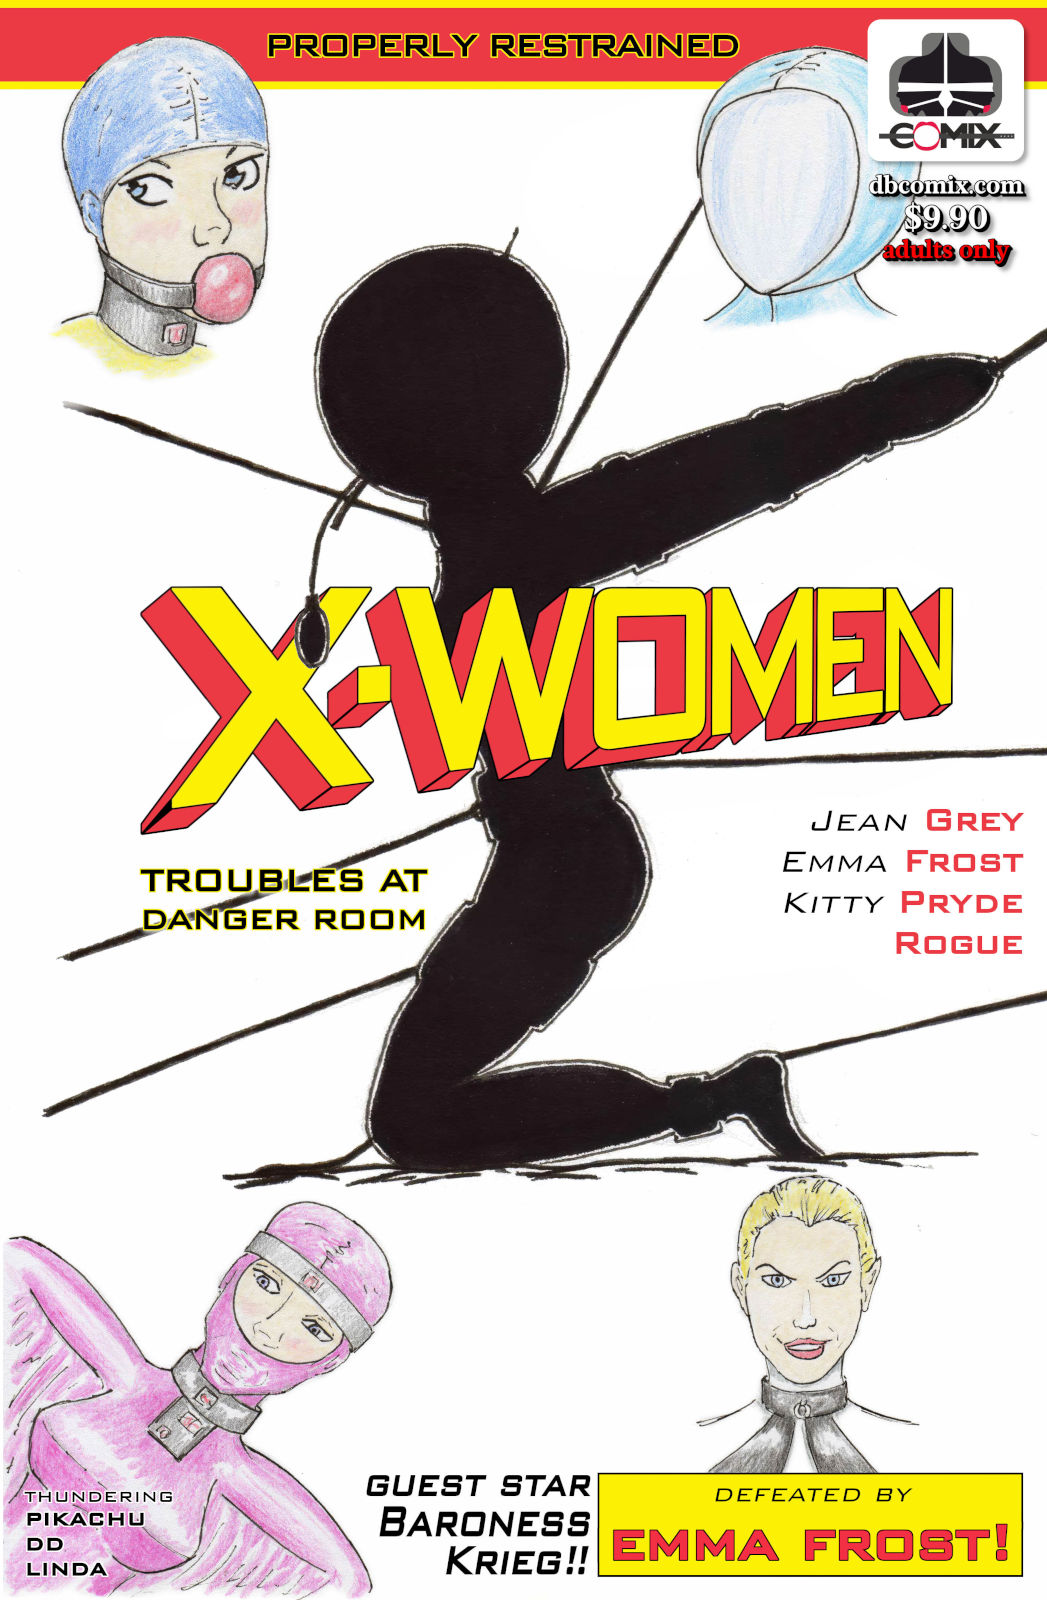 xwomen troubles at danger room.jpg